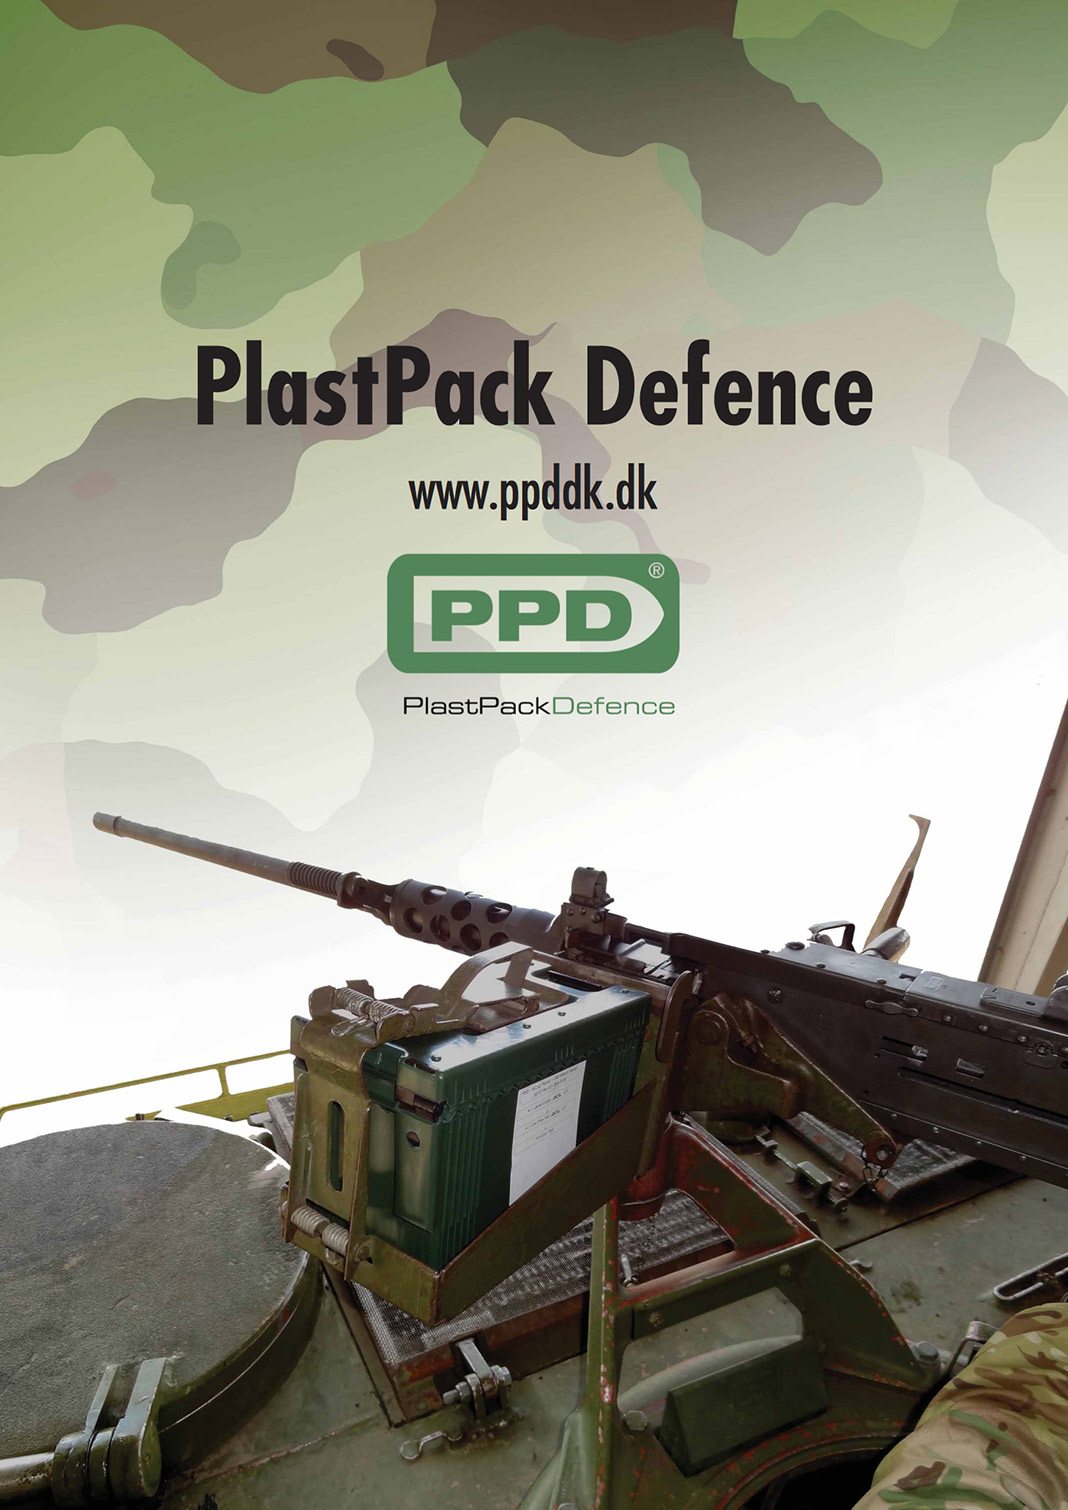 PlastPack Defence produces innovative ammunition solutions|